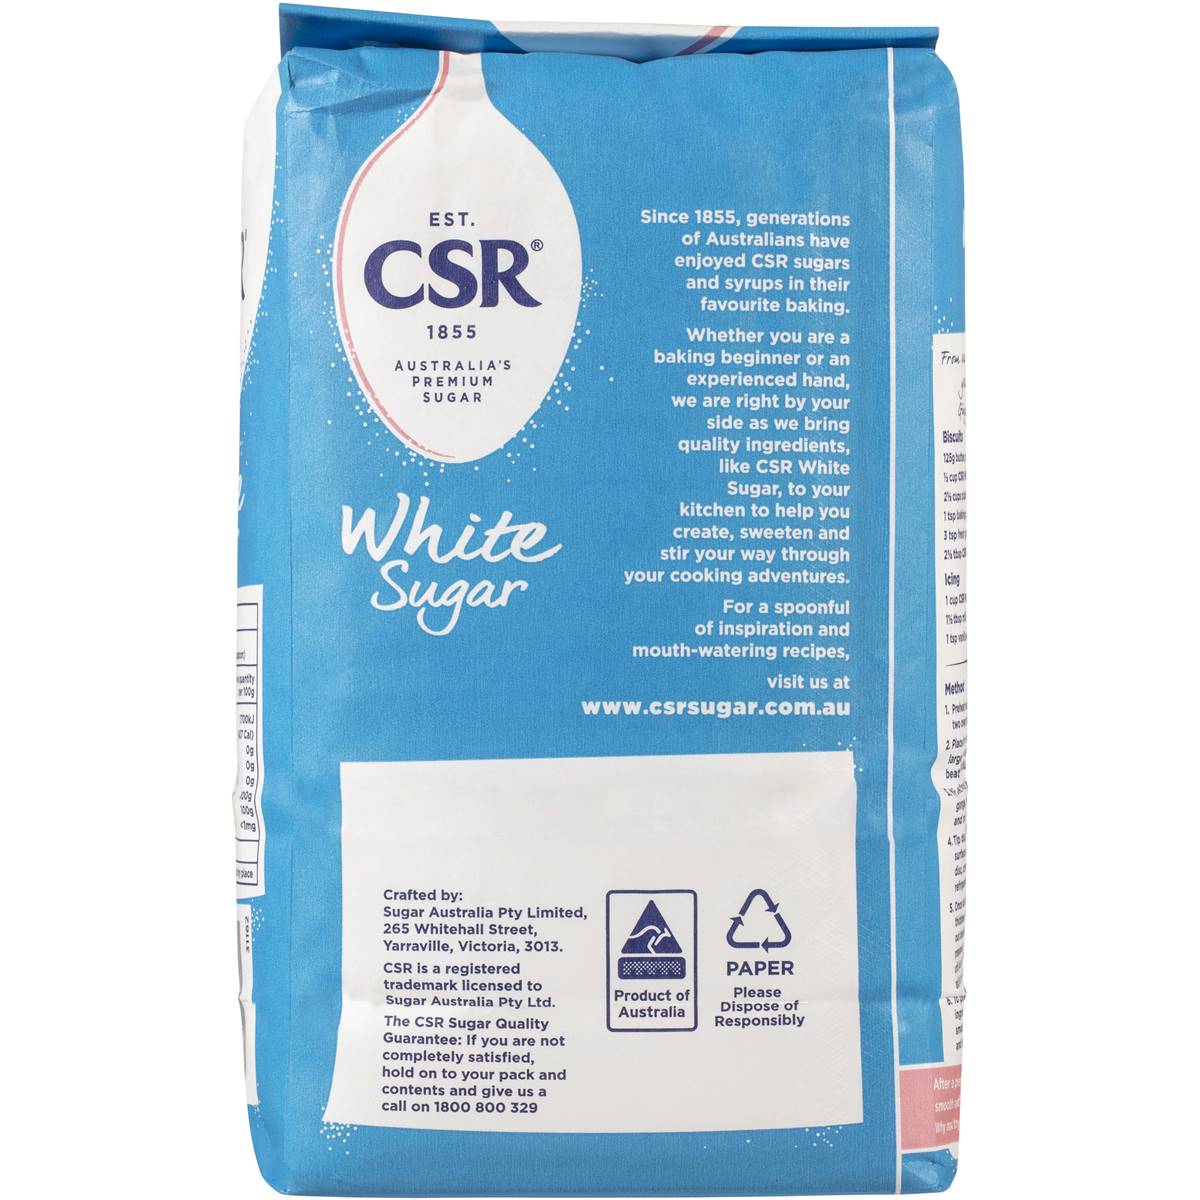 CSR White Sugar 2kg